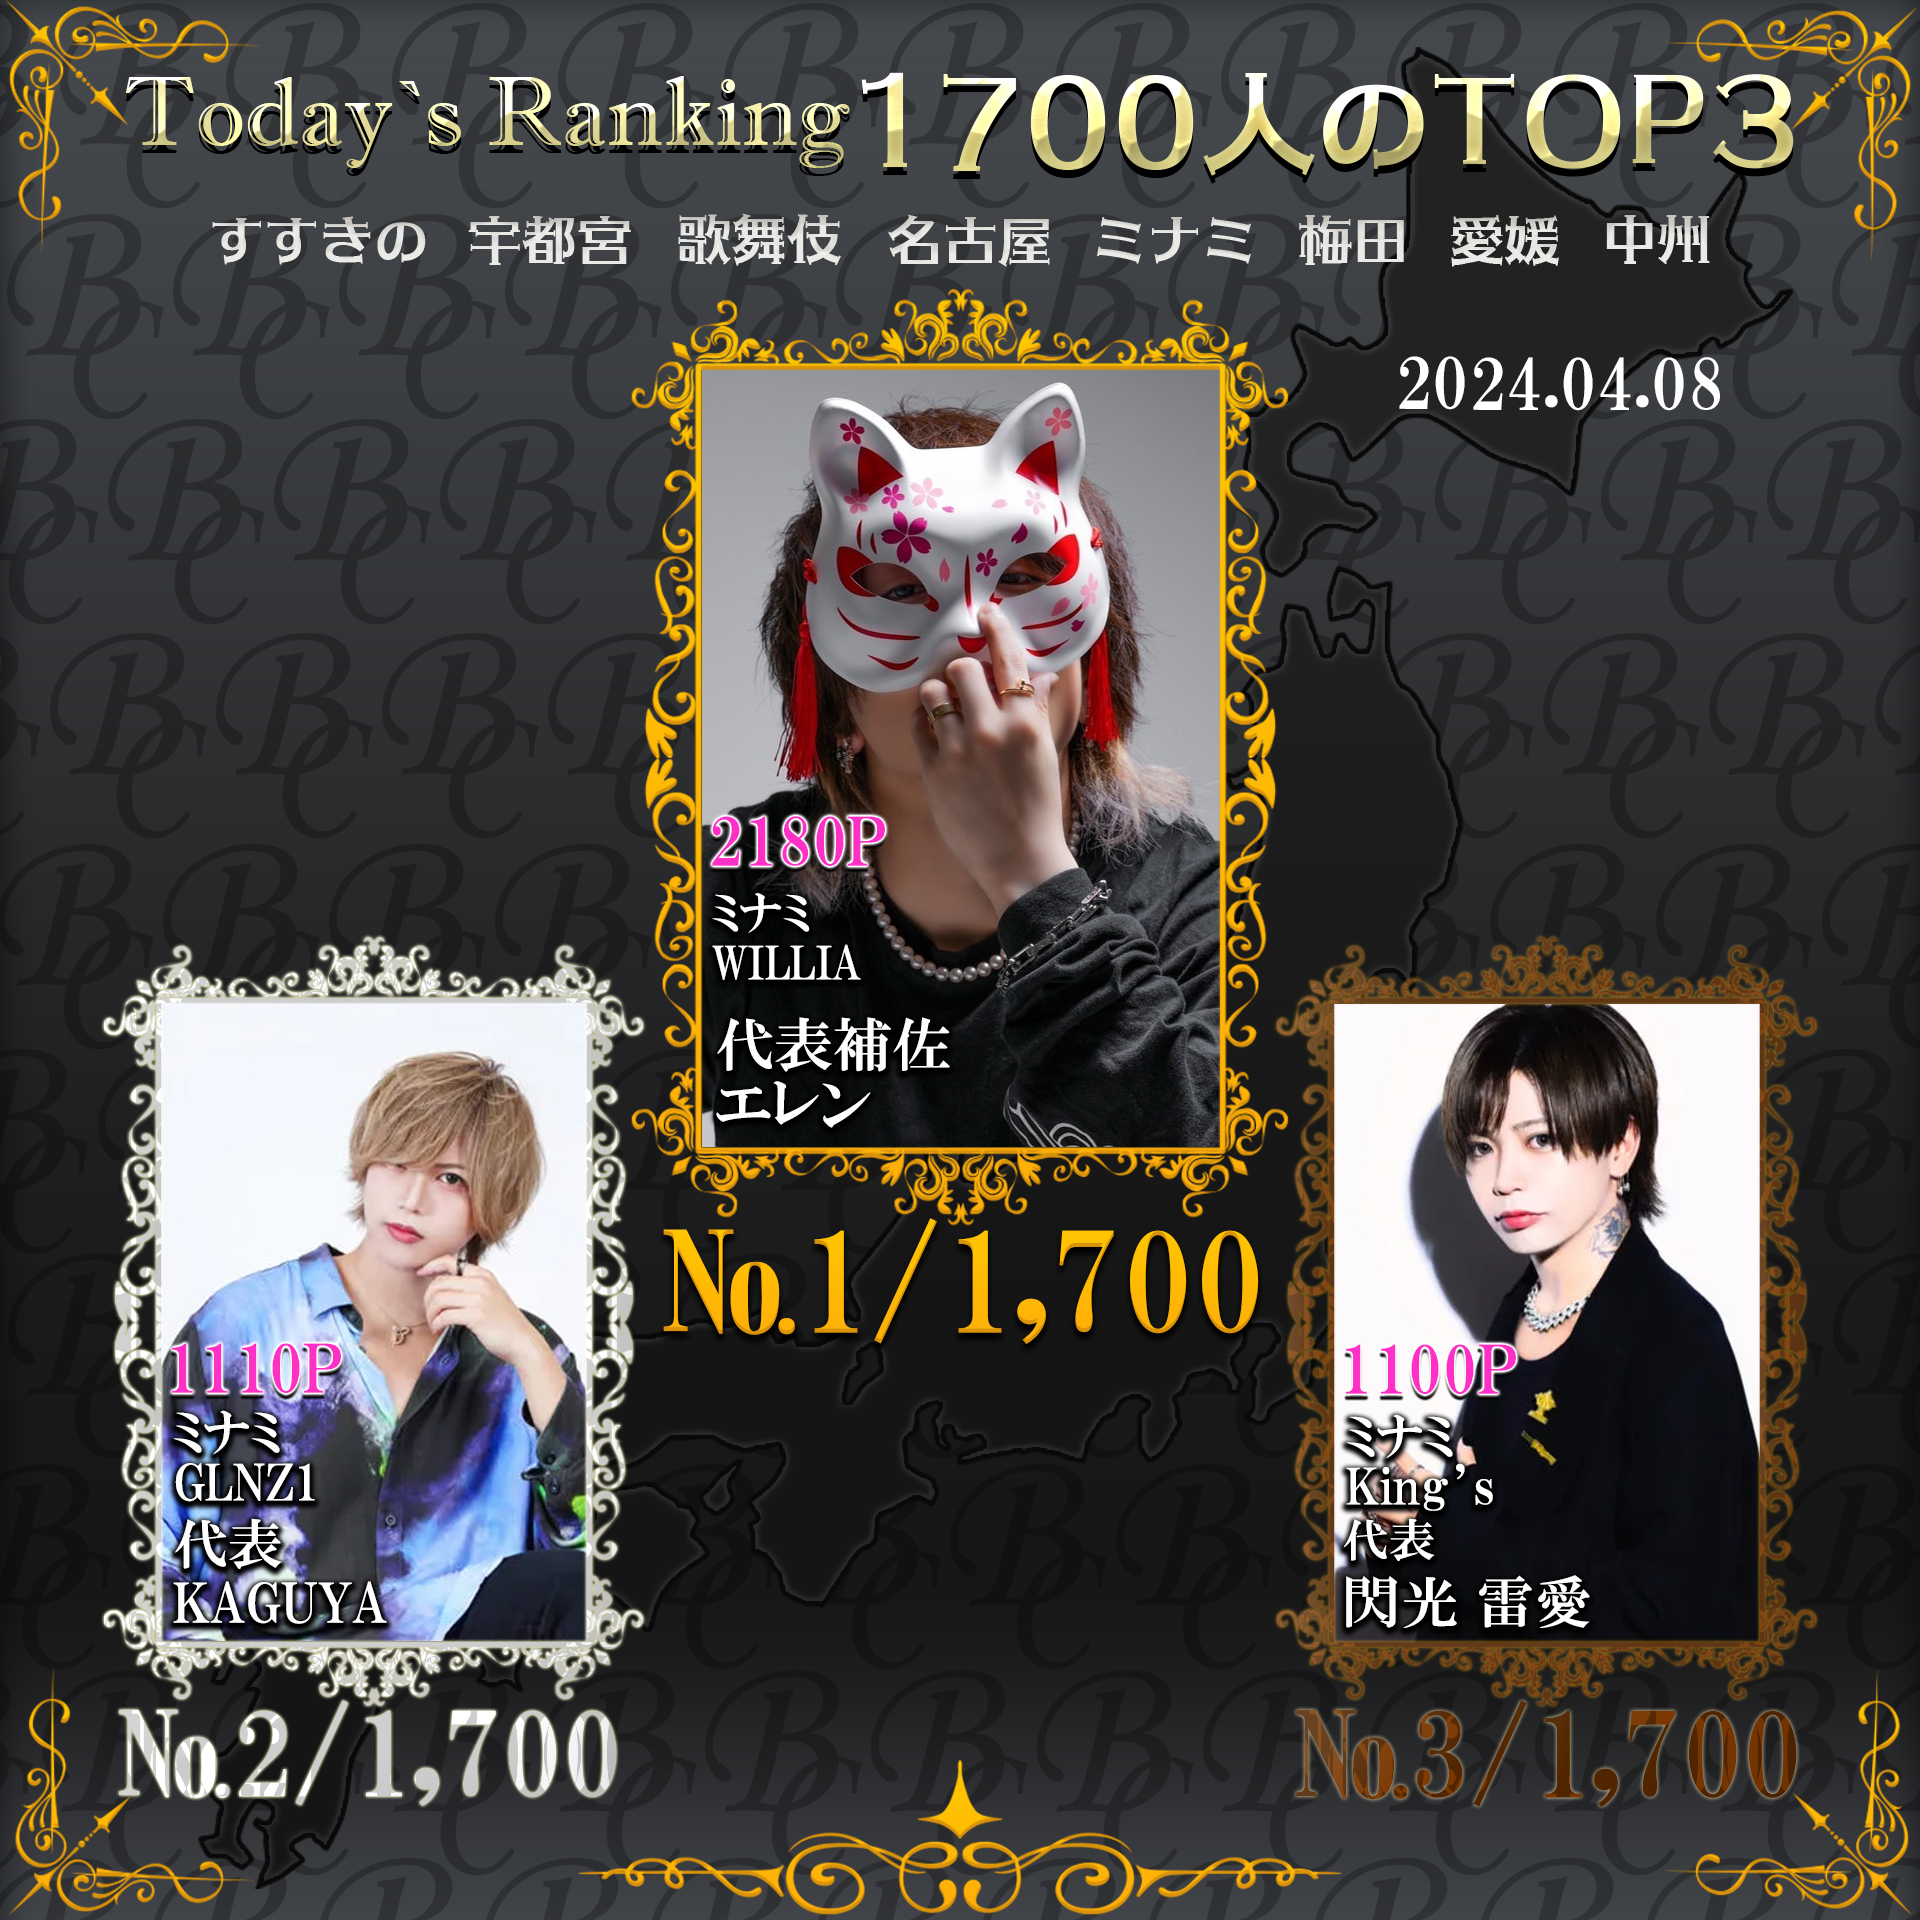 4/8 Today’s Ranking